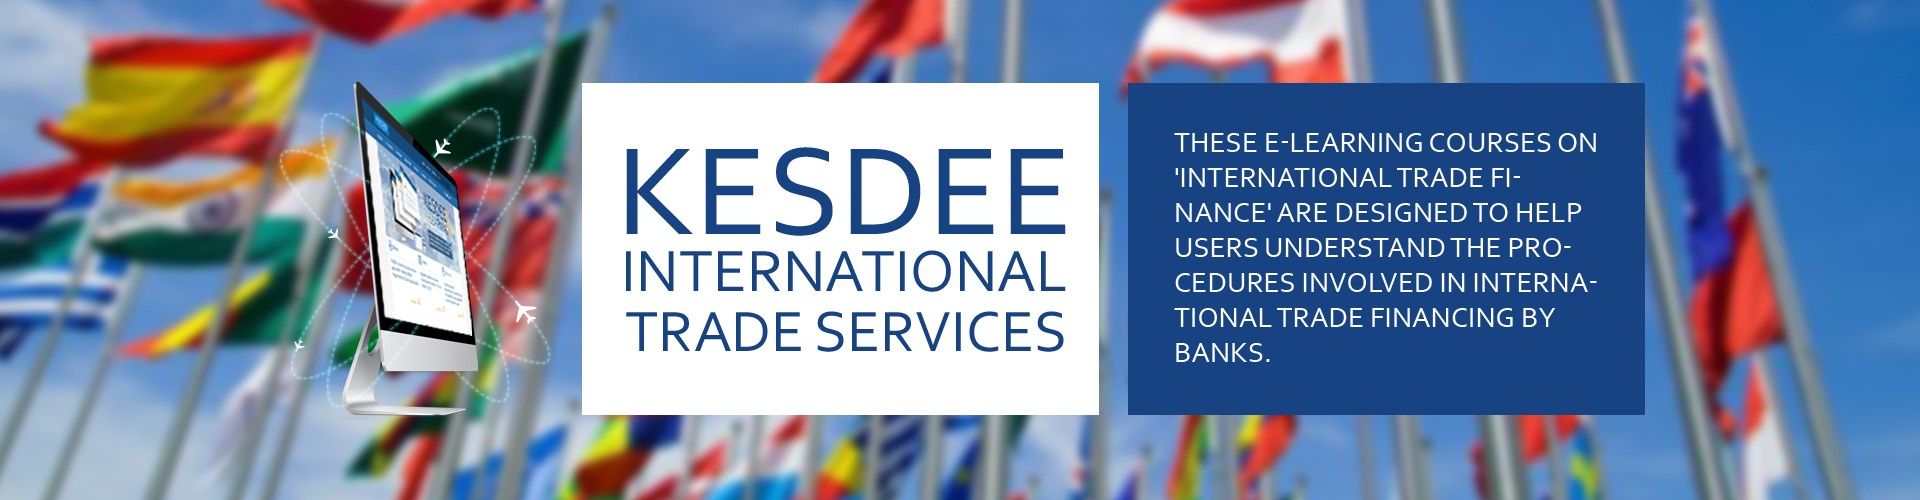 kesdee international trade